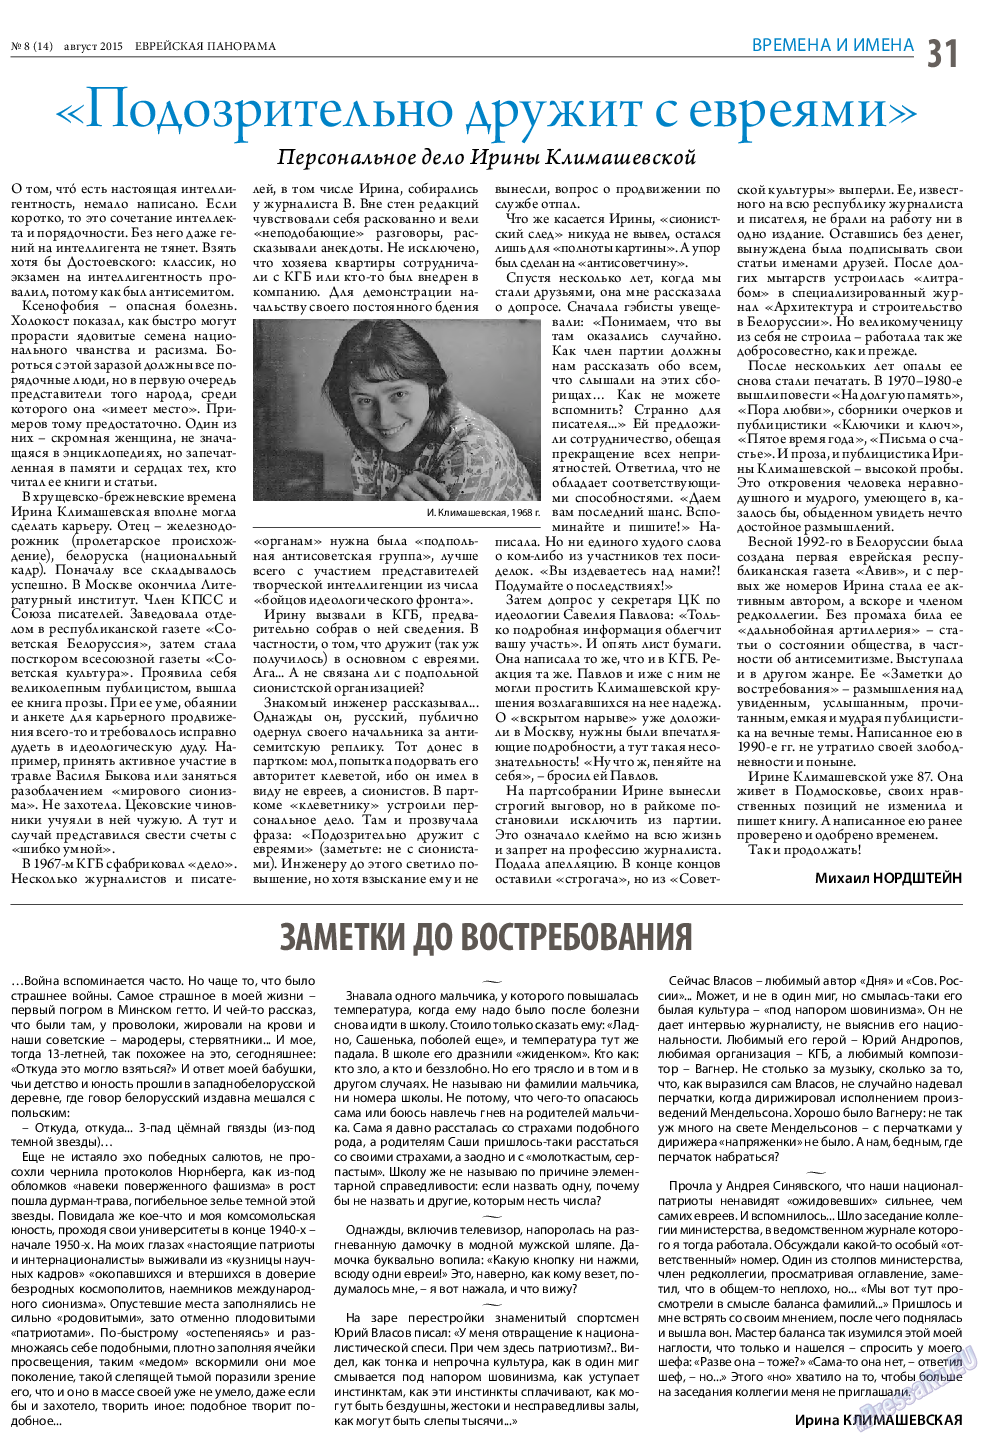 Еврейская панорама, газета. 2015 №8 стр.31